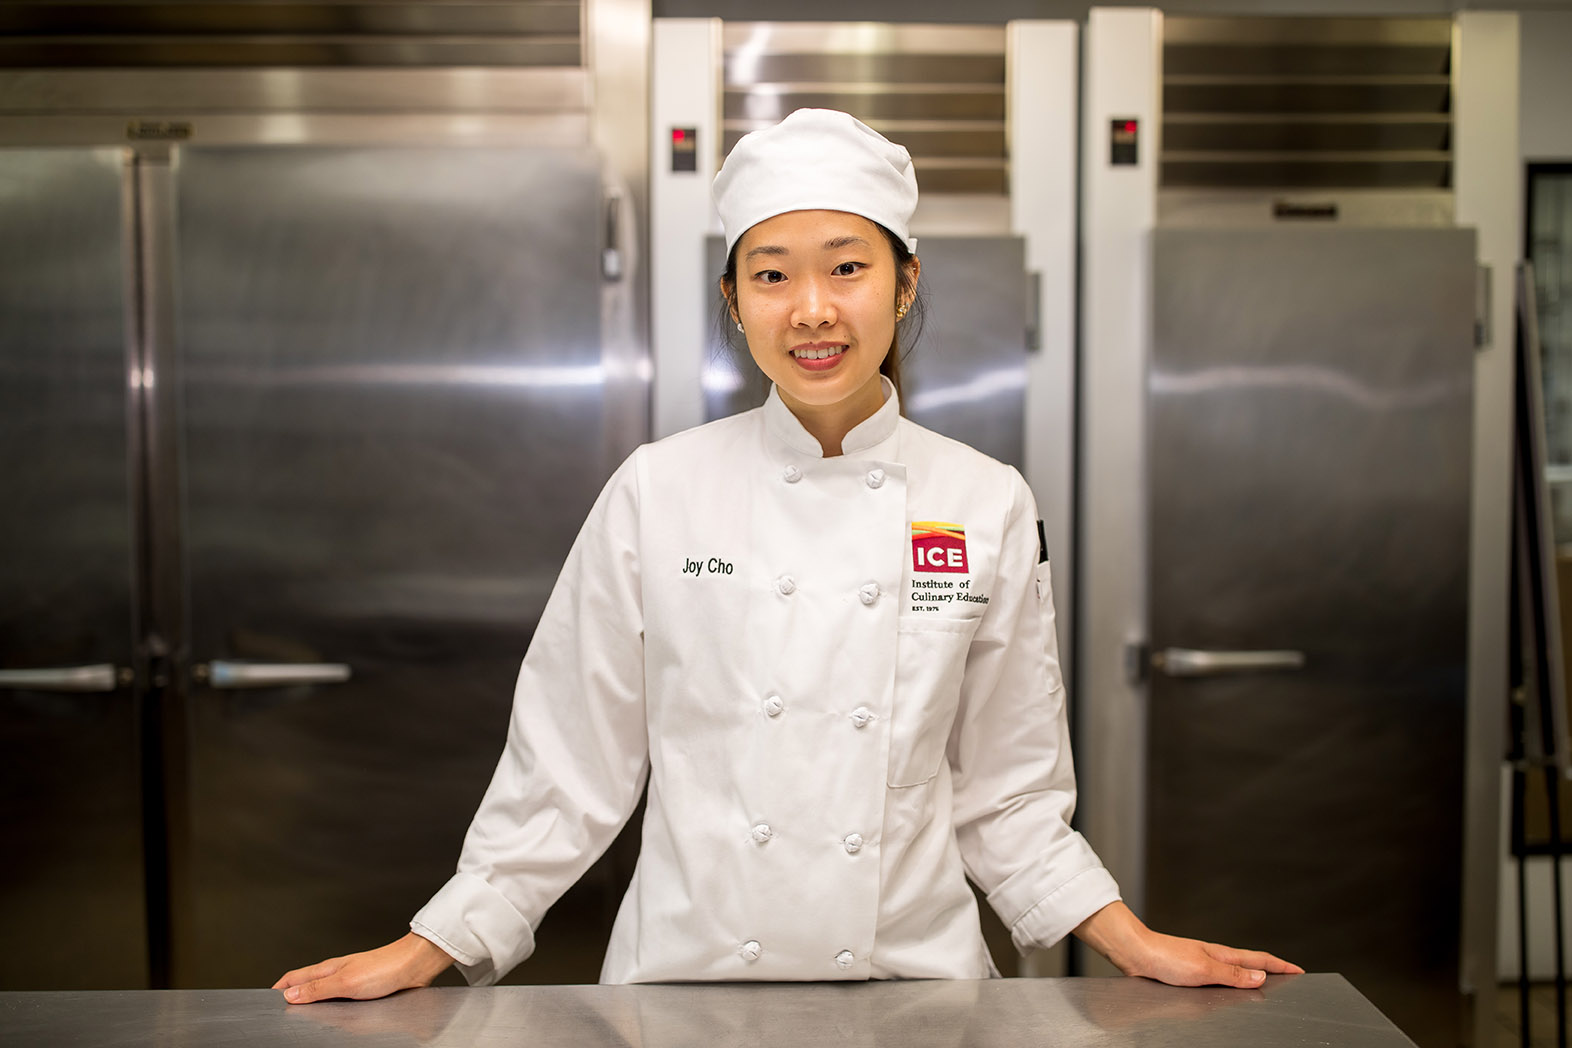 Joy Cho studies pastry and baking arts at ICE.